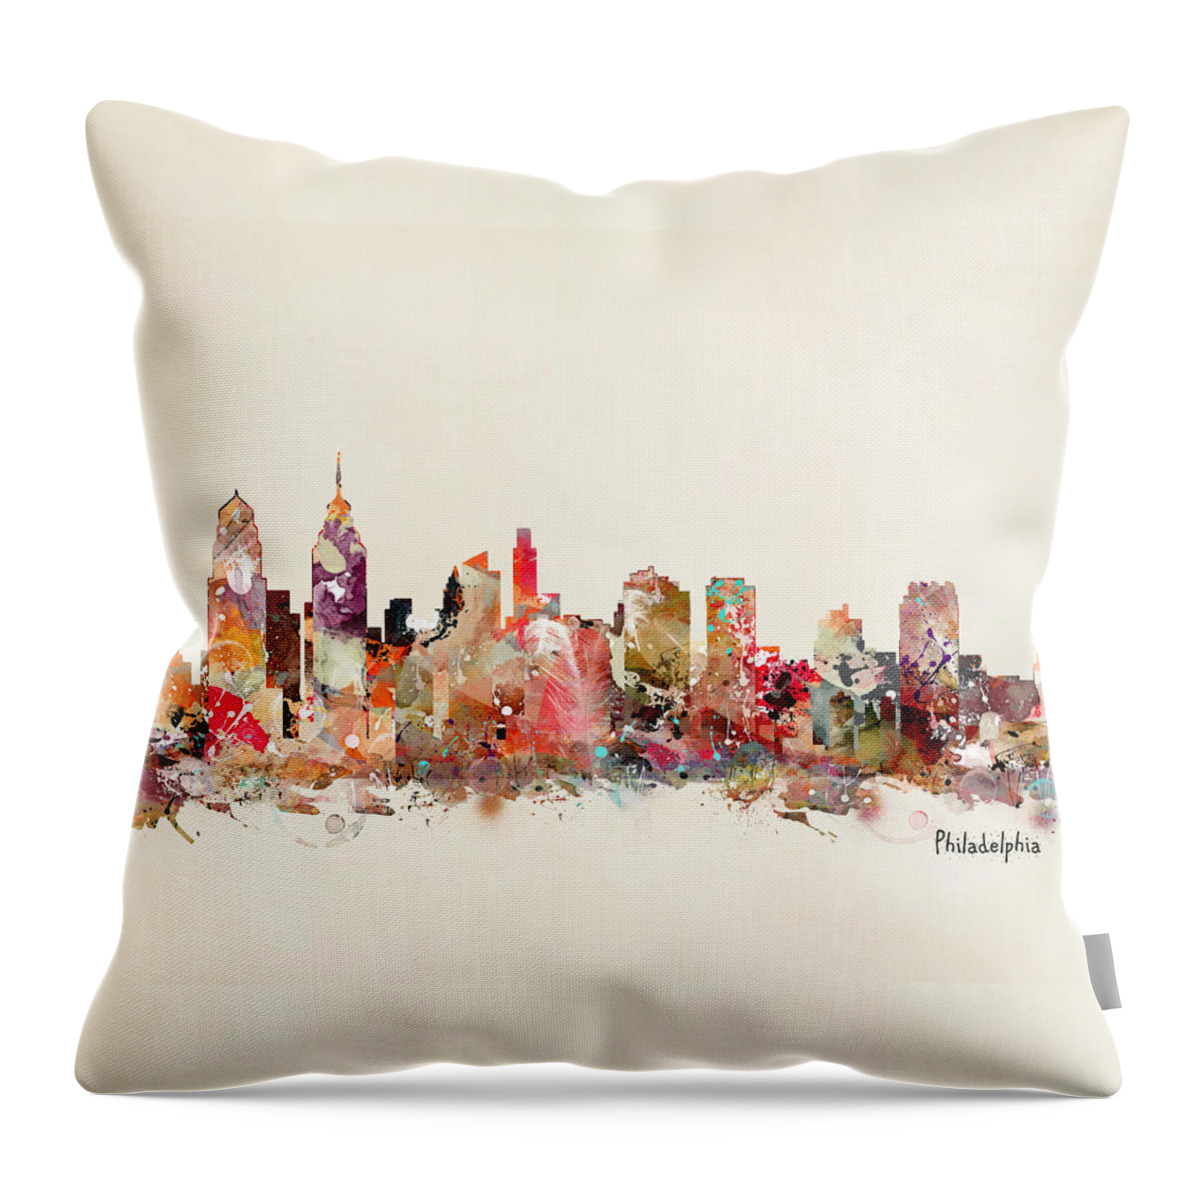 Philadelphia Pennsylvania Throw Pillow featuring the painting Philadelphia City Skyline #2 by Bri Buckley